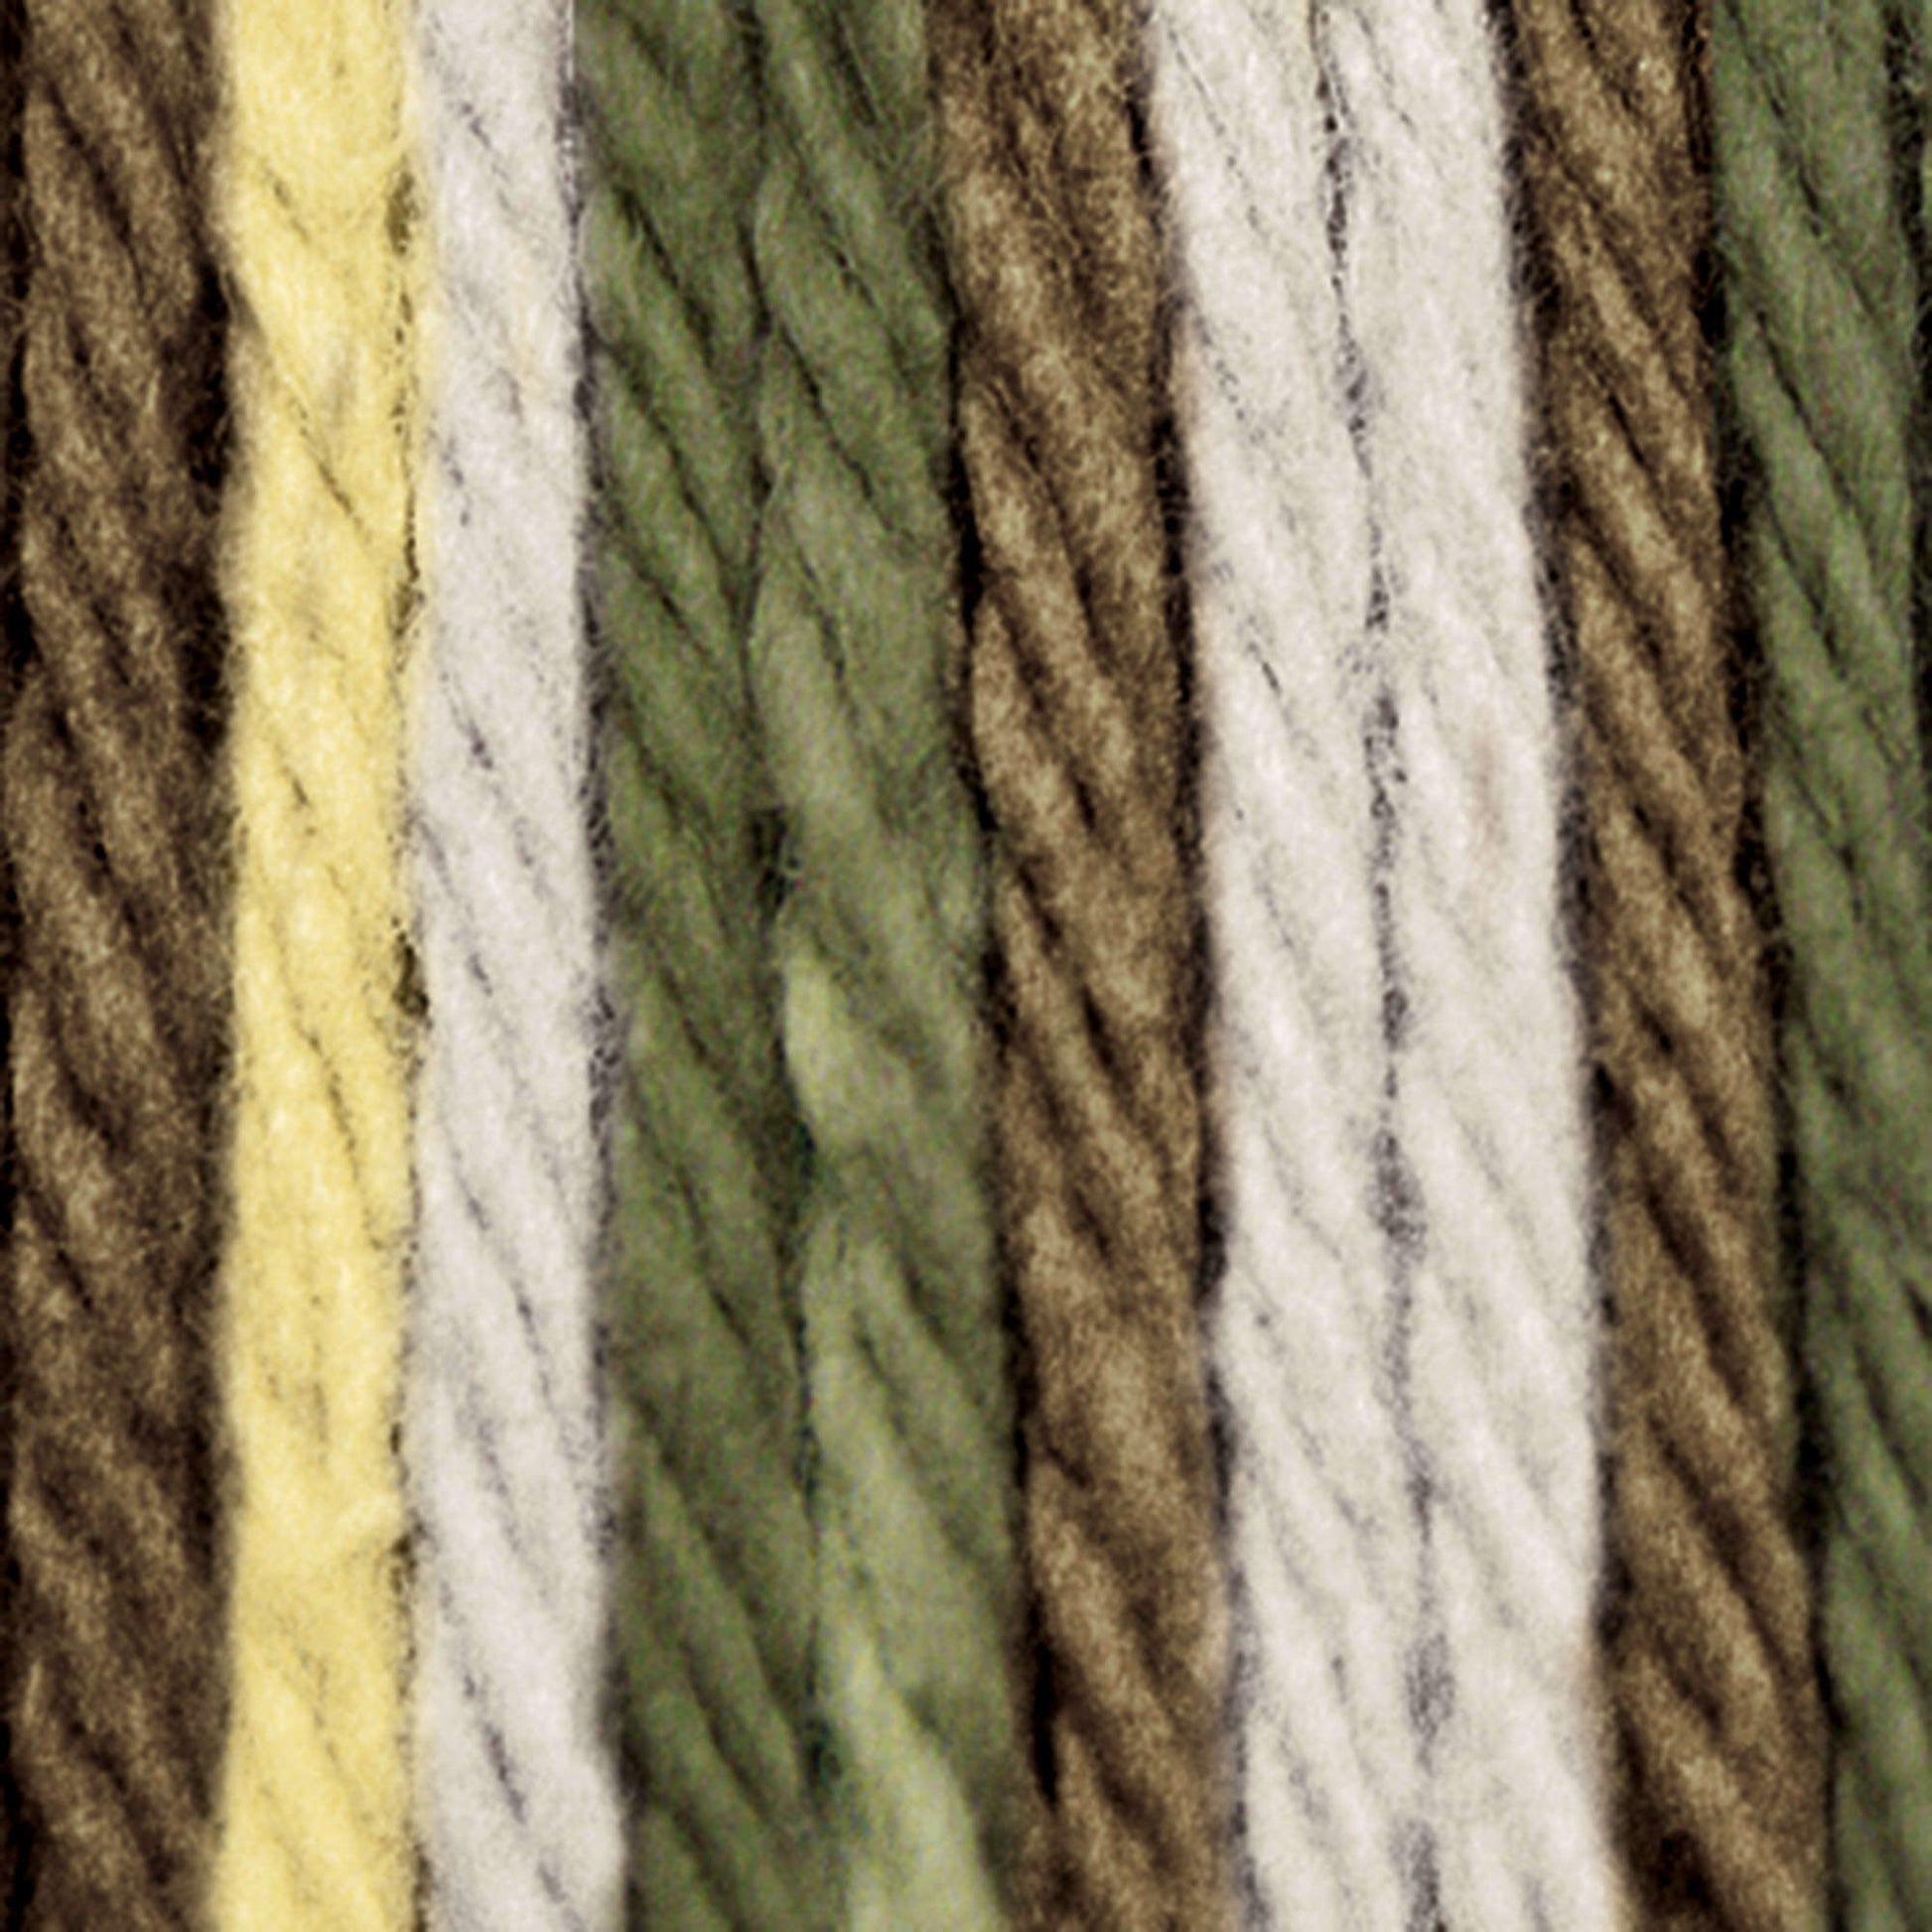 Bernat Handicrafter Cotton Variegates Yarn (340g/12oz) - Discontinued